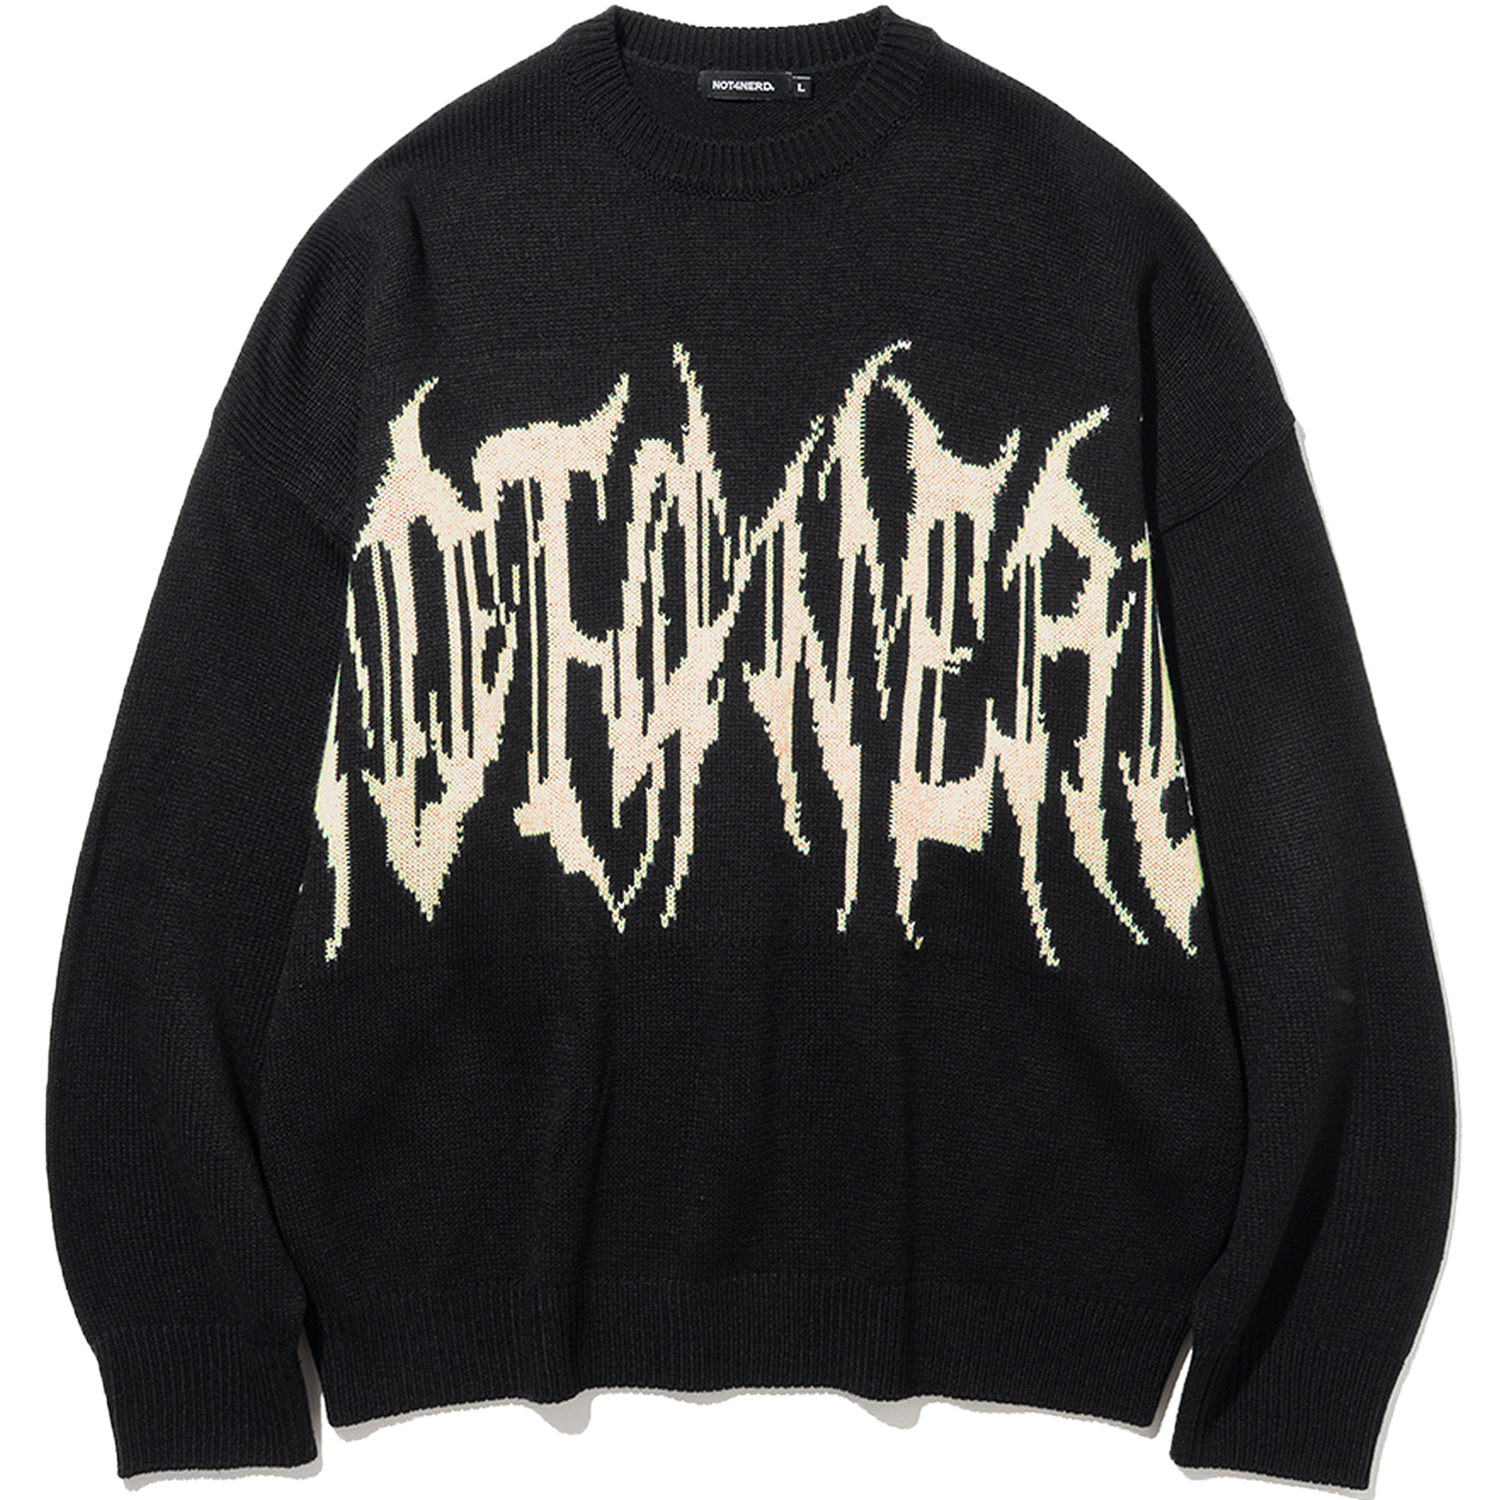 Wild Logo Knit Sweater - Black,NOT4NERD